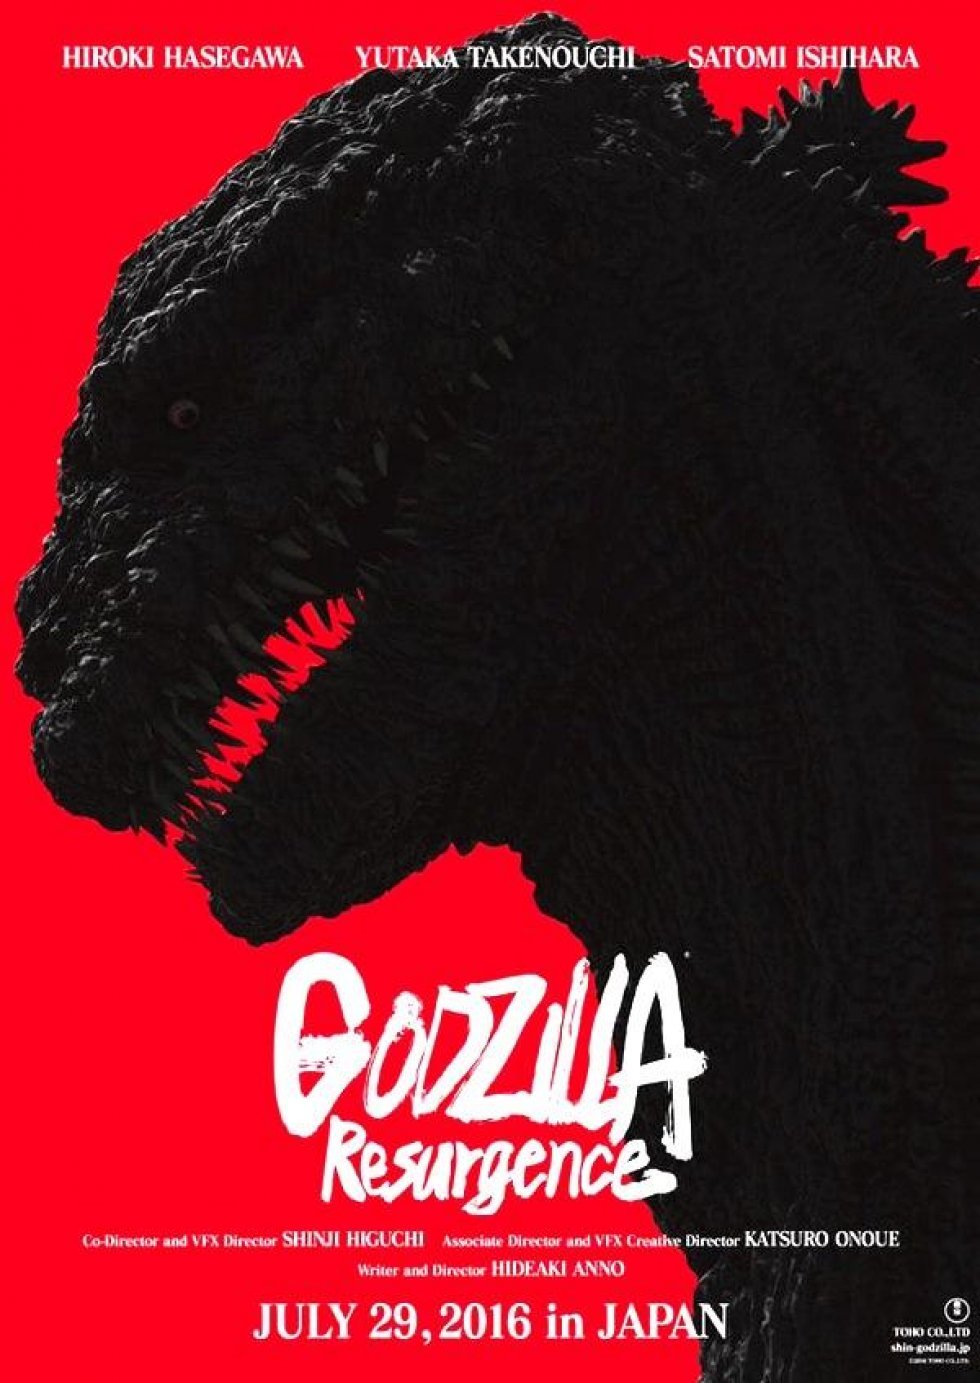 Trailer for 'Godzilla Resurgence'